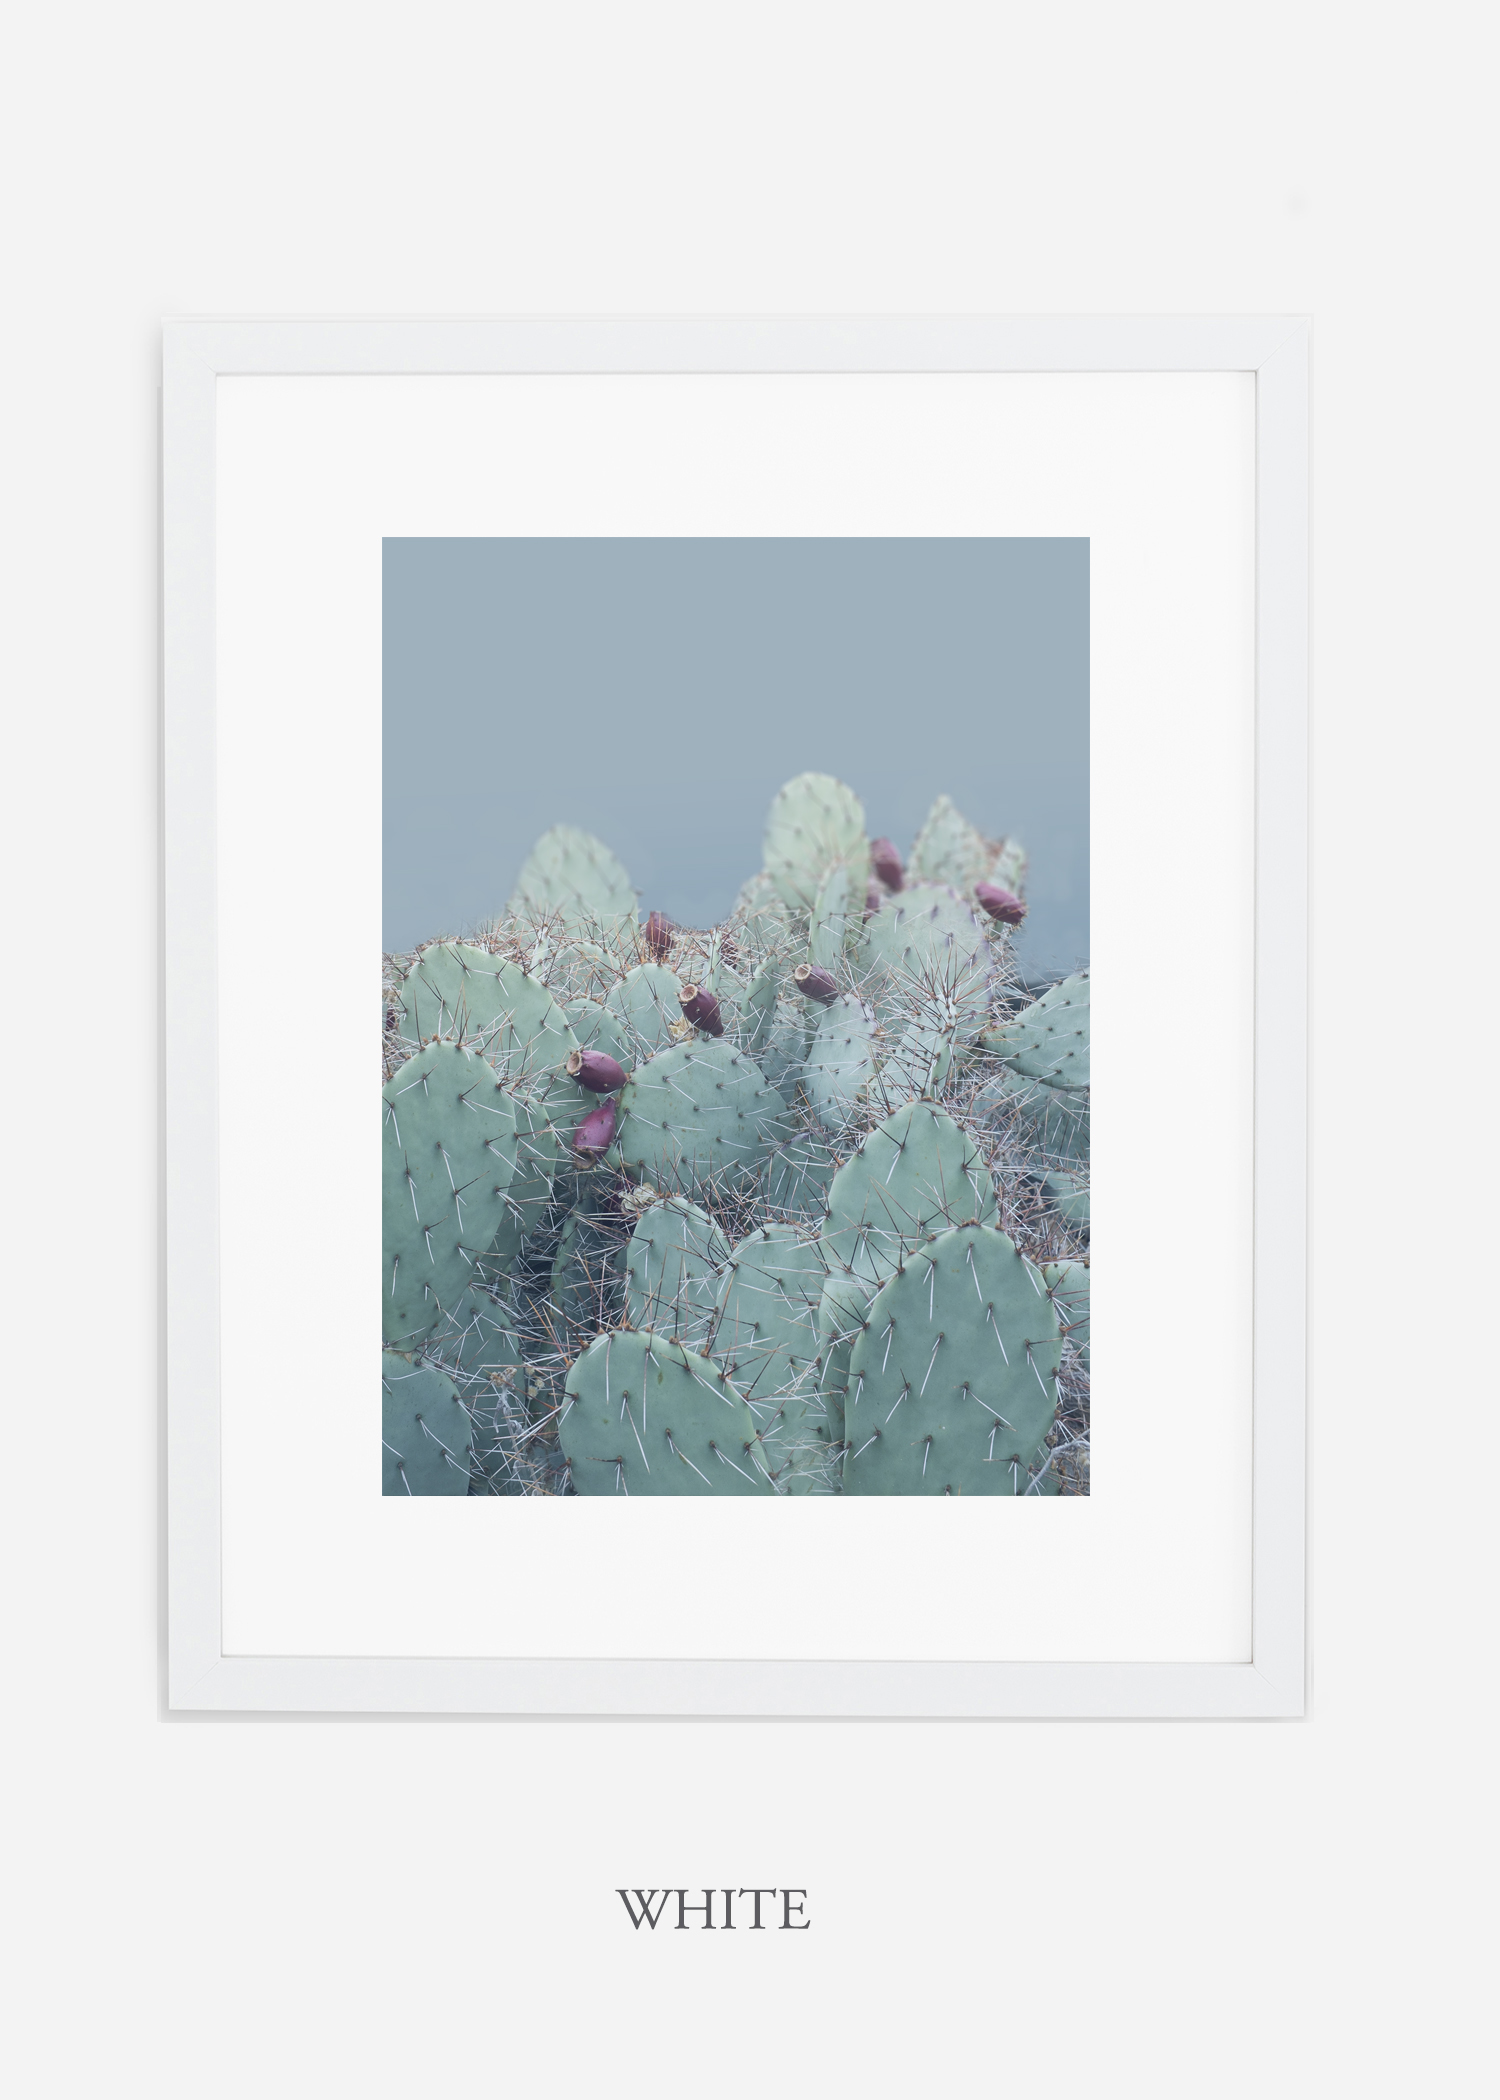 Desert_whiteframe_DesertBluesCactusCactus_Art_Photography_interiordesign_bohemian_cactusart.jpg